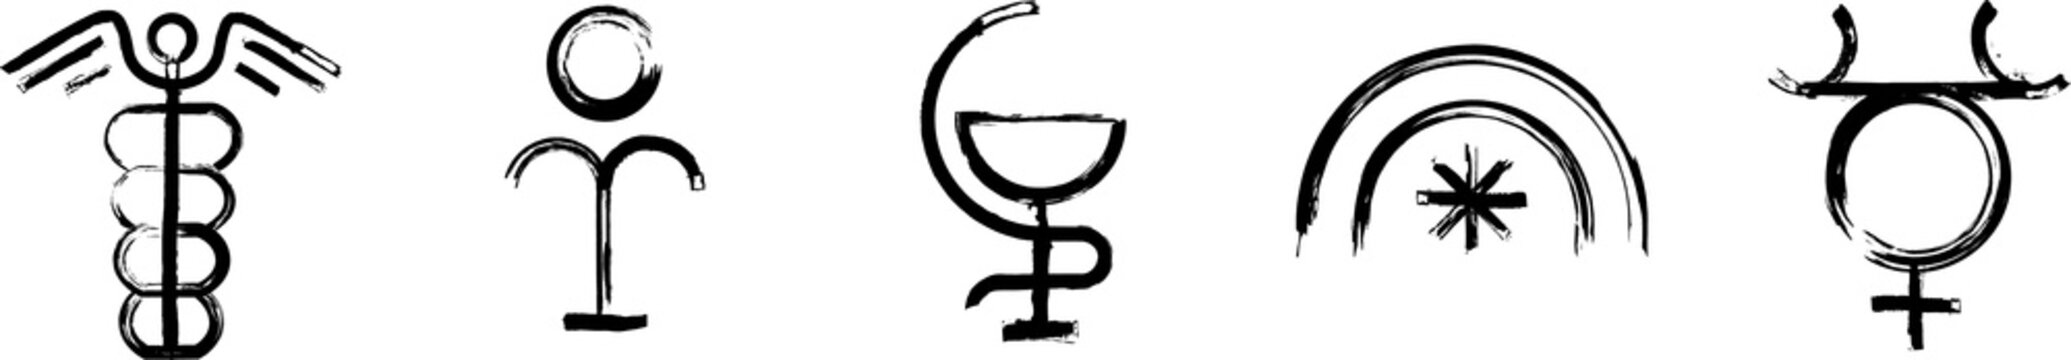 Symbols for Greek Mythology signs. Set of the ancient glyphs. Hermes (Mercury), Hydra, Hygeia, Iris (Arcus), Pan. Black ink handwriting. Vector